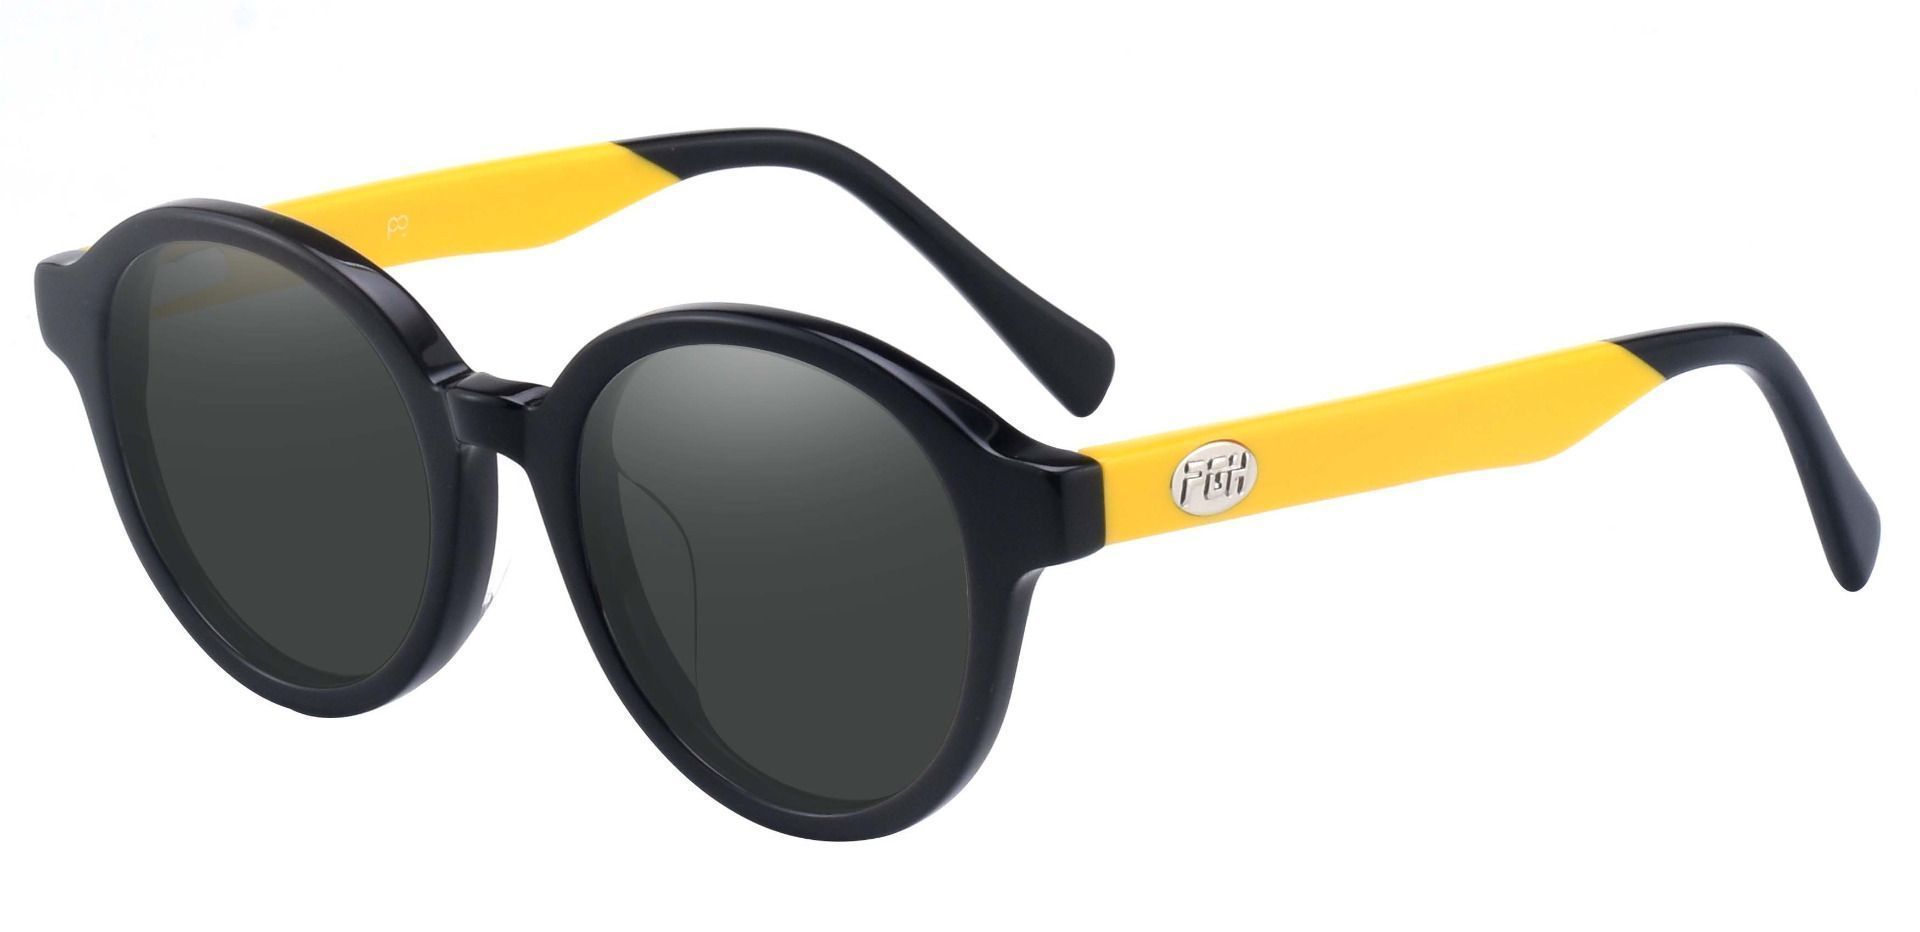 Steel City Round Prescription Sunglasses - Black Frame With Gray Lenses